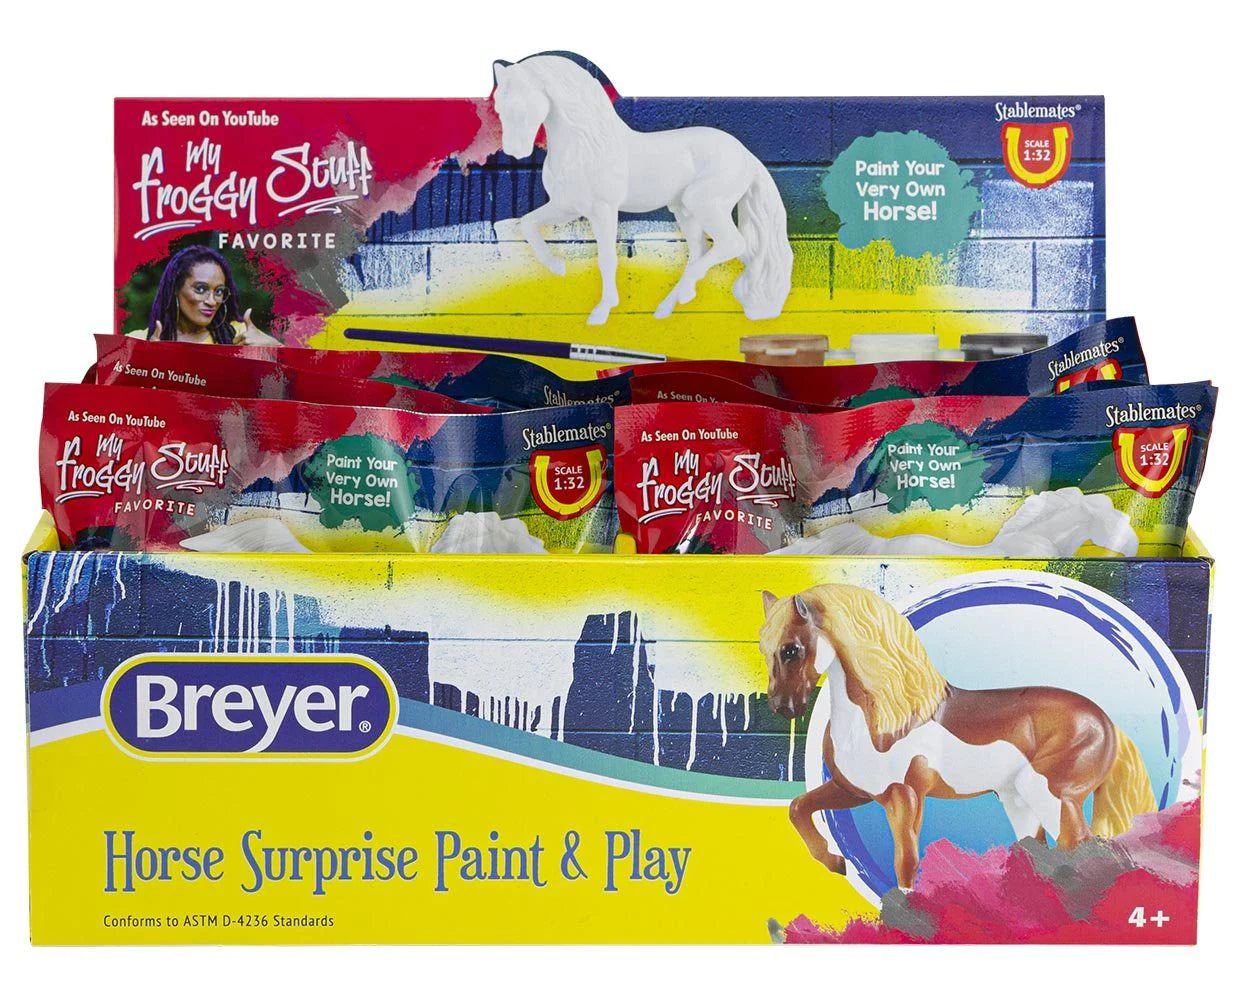 Breyer Horse Surprise Paint & Play